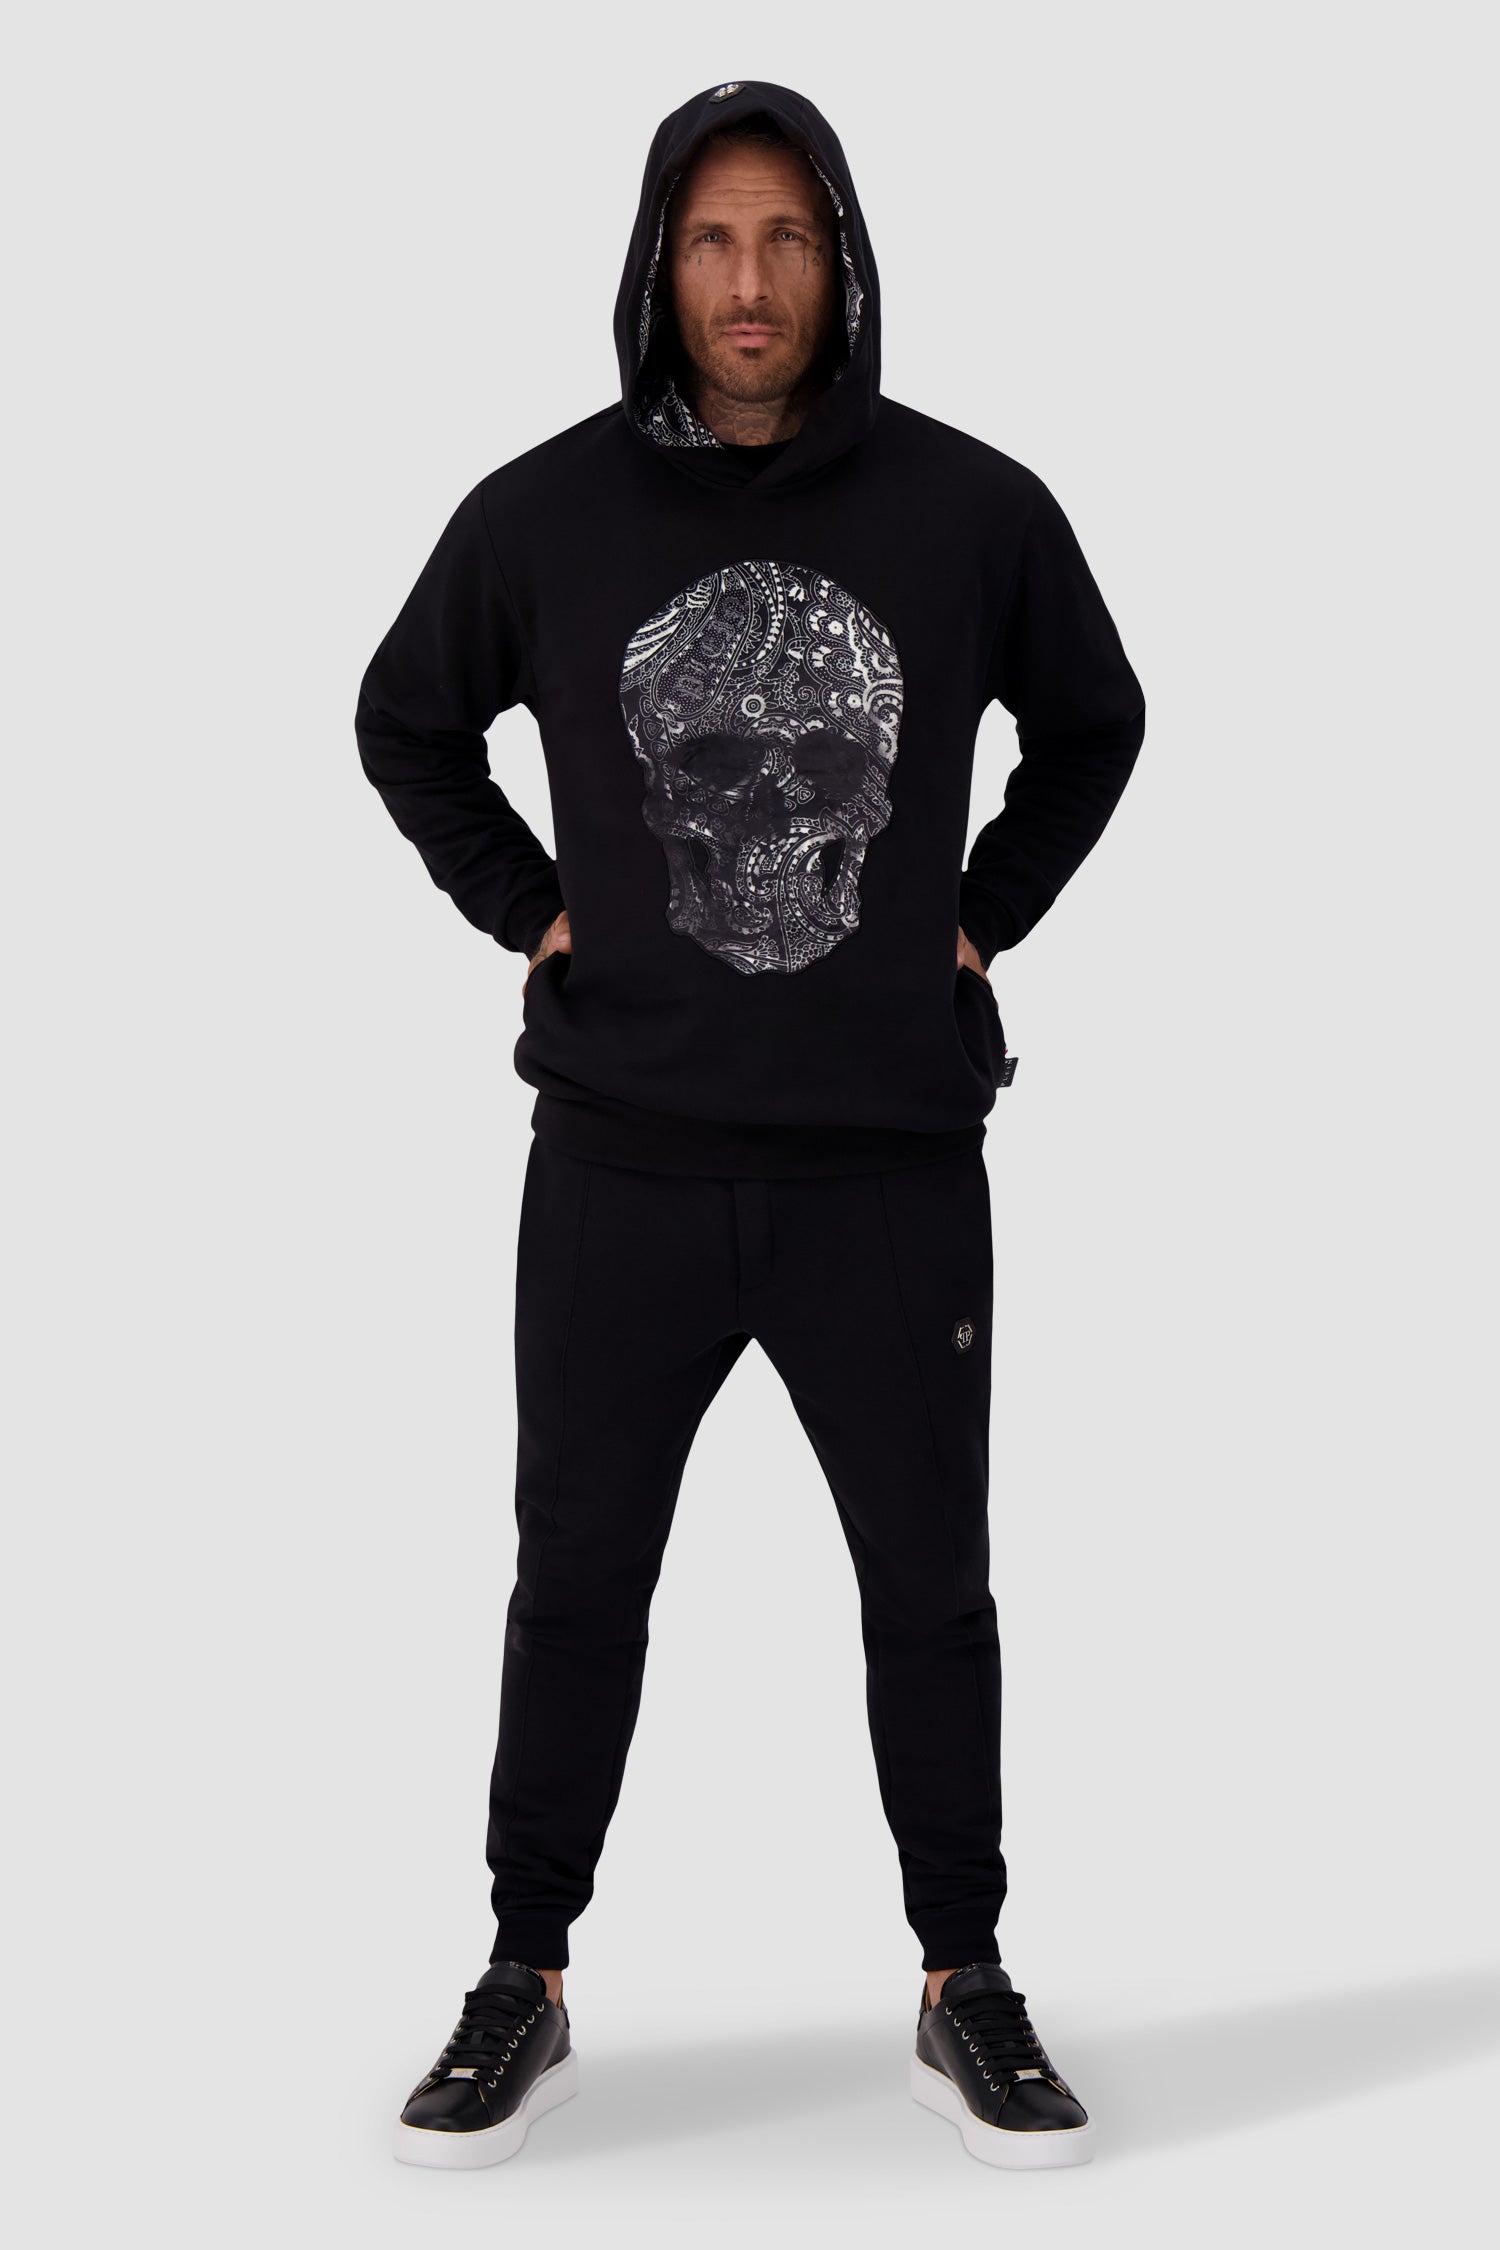 Philipp Plein Black Hoodie Sweatshirt Paisley Skull